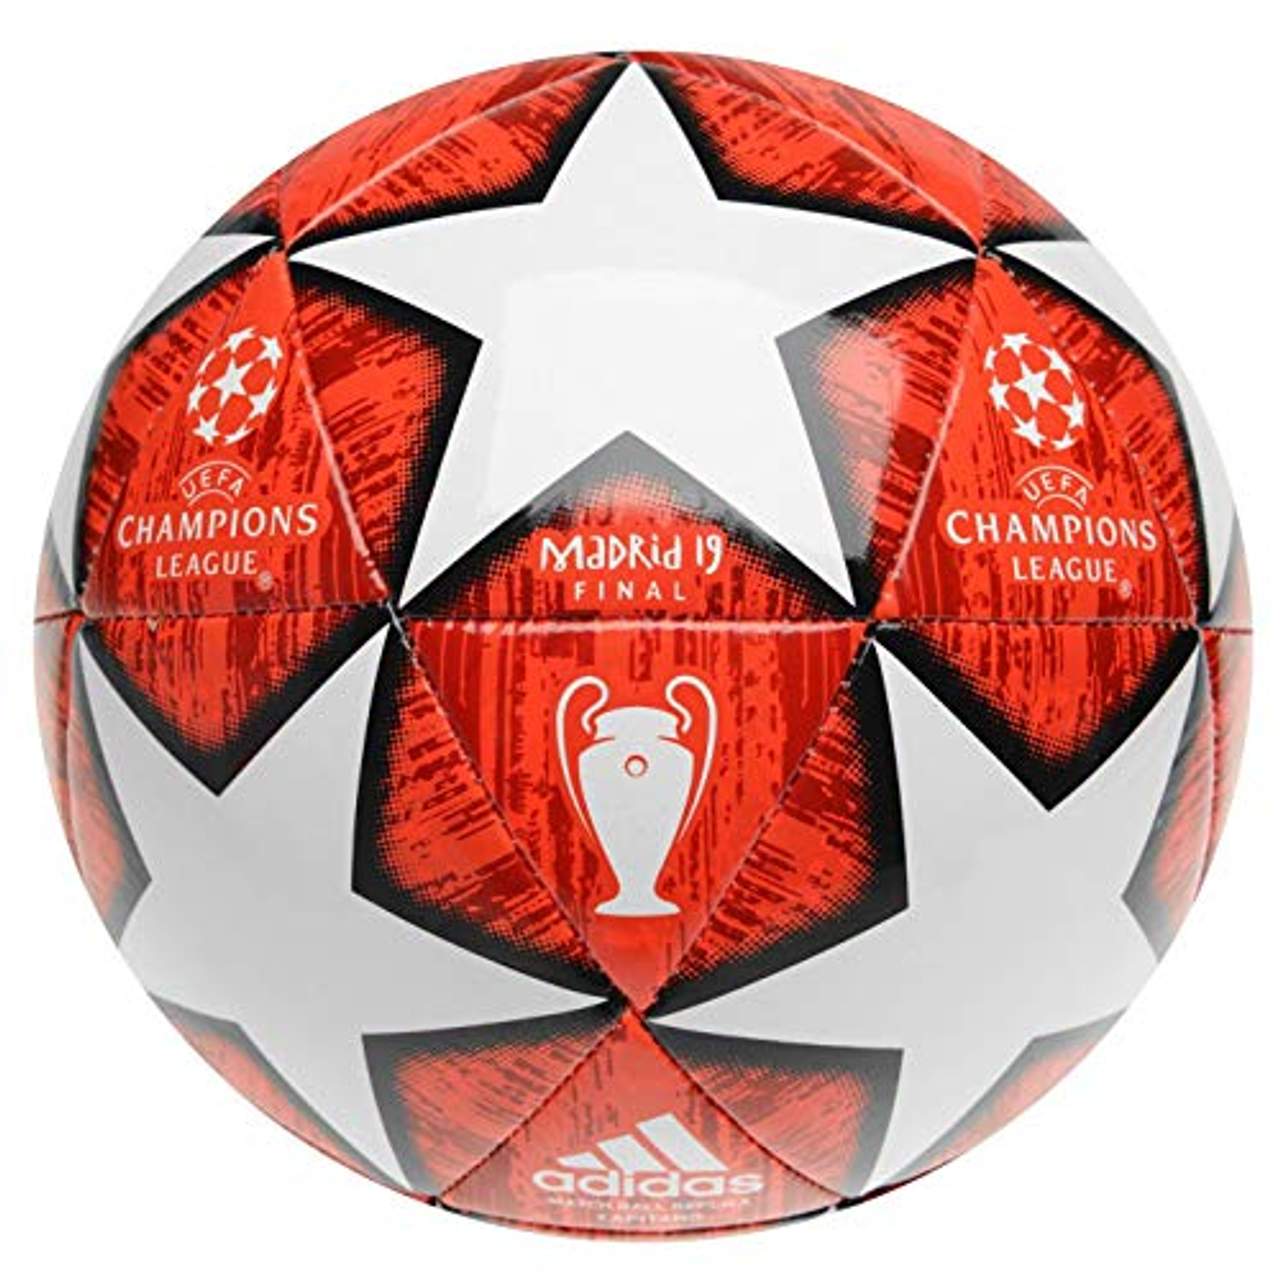 adidas 2019 Champions League Madrid Finale Fußball Profi Europa